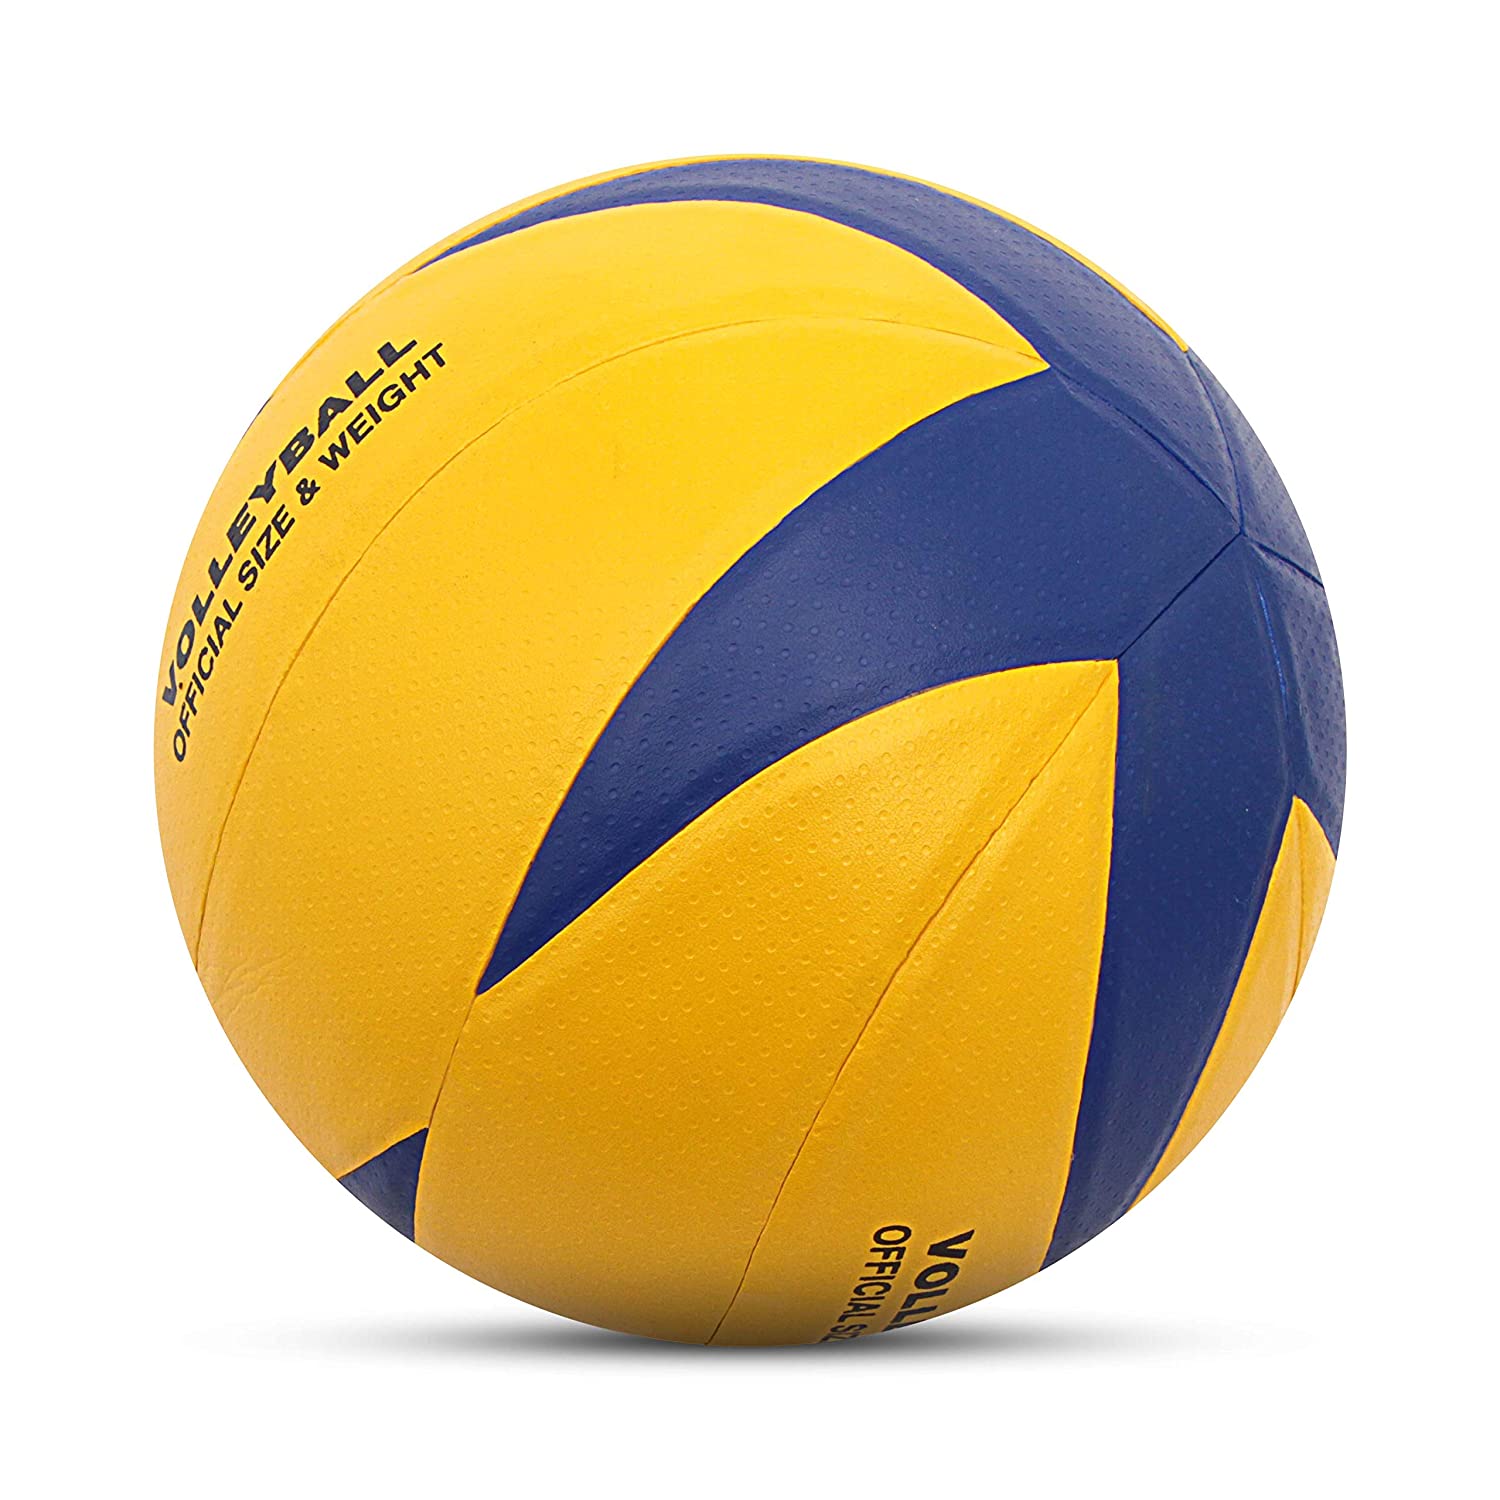 Nivia Spiral Volleyball, Yellow (Size 4) - Best Price online Prokicksports.com